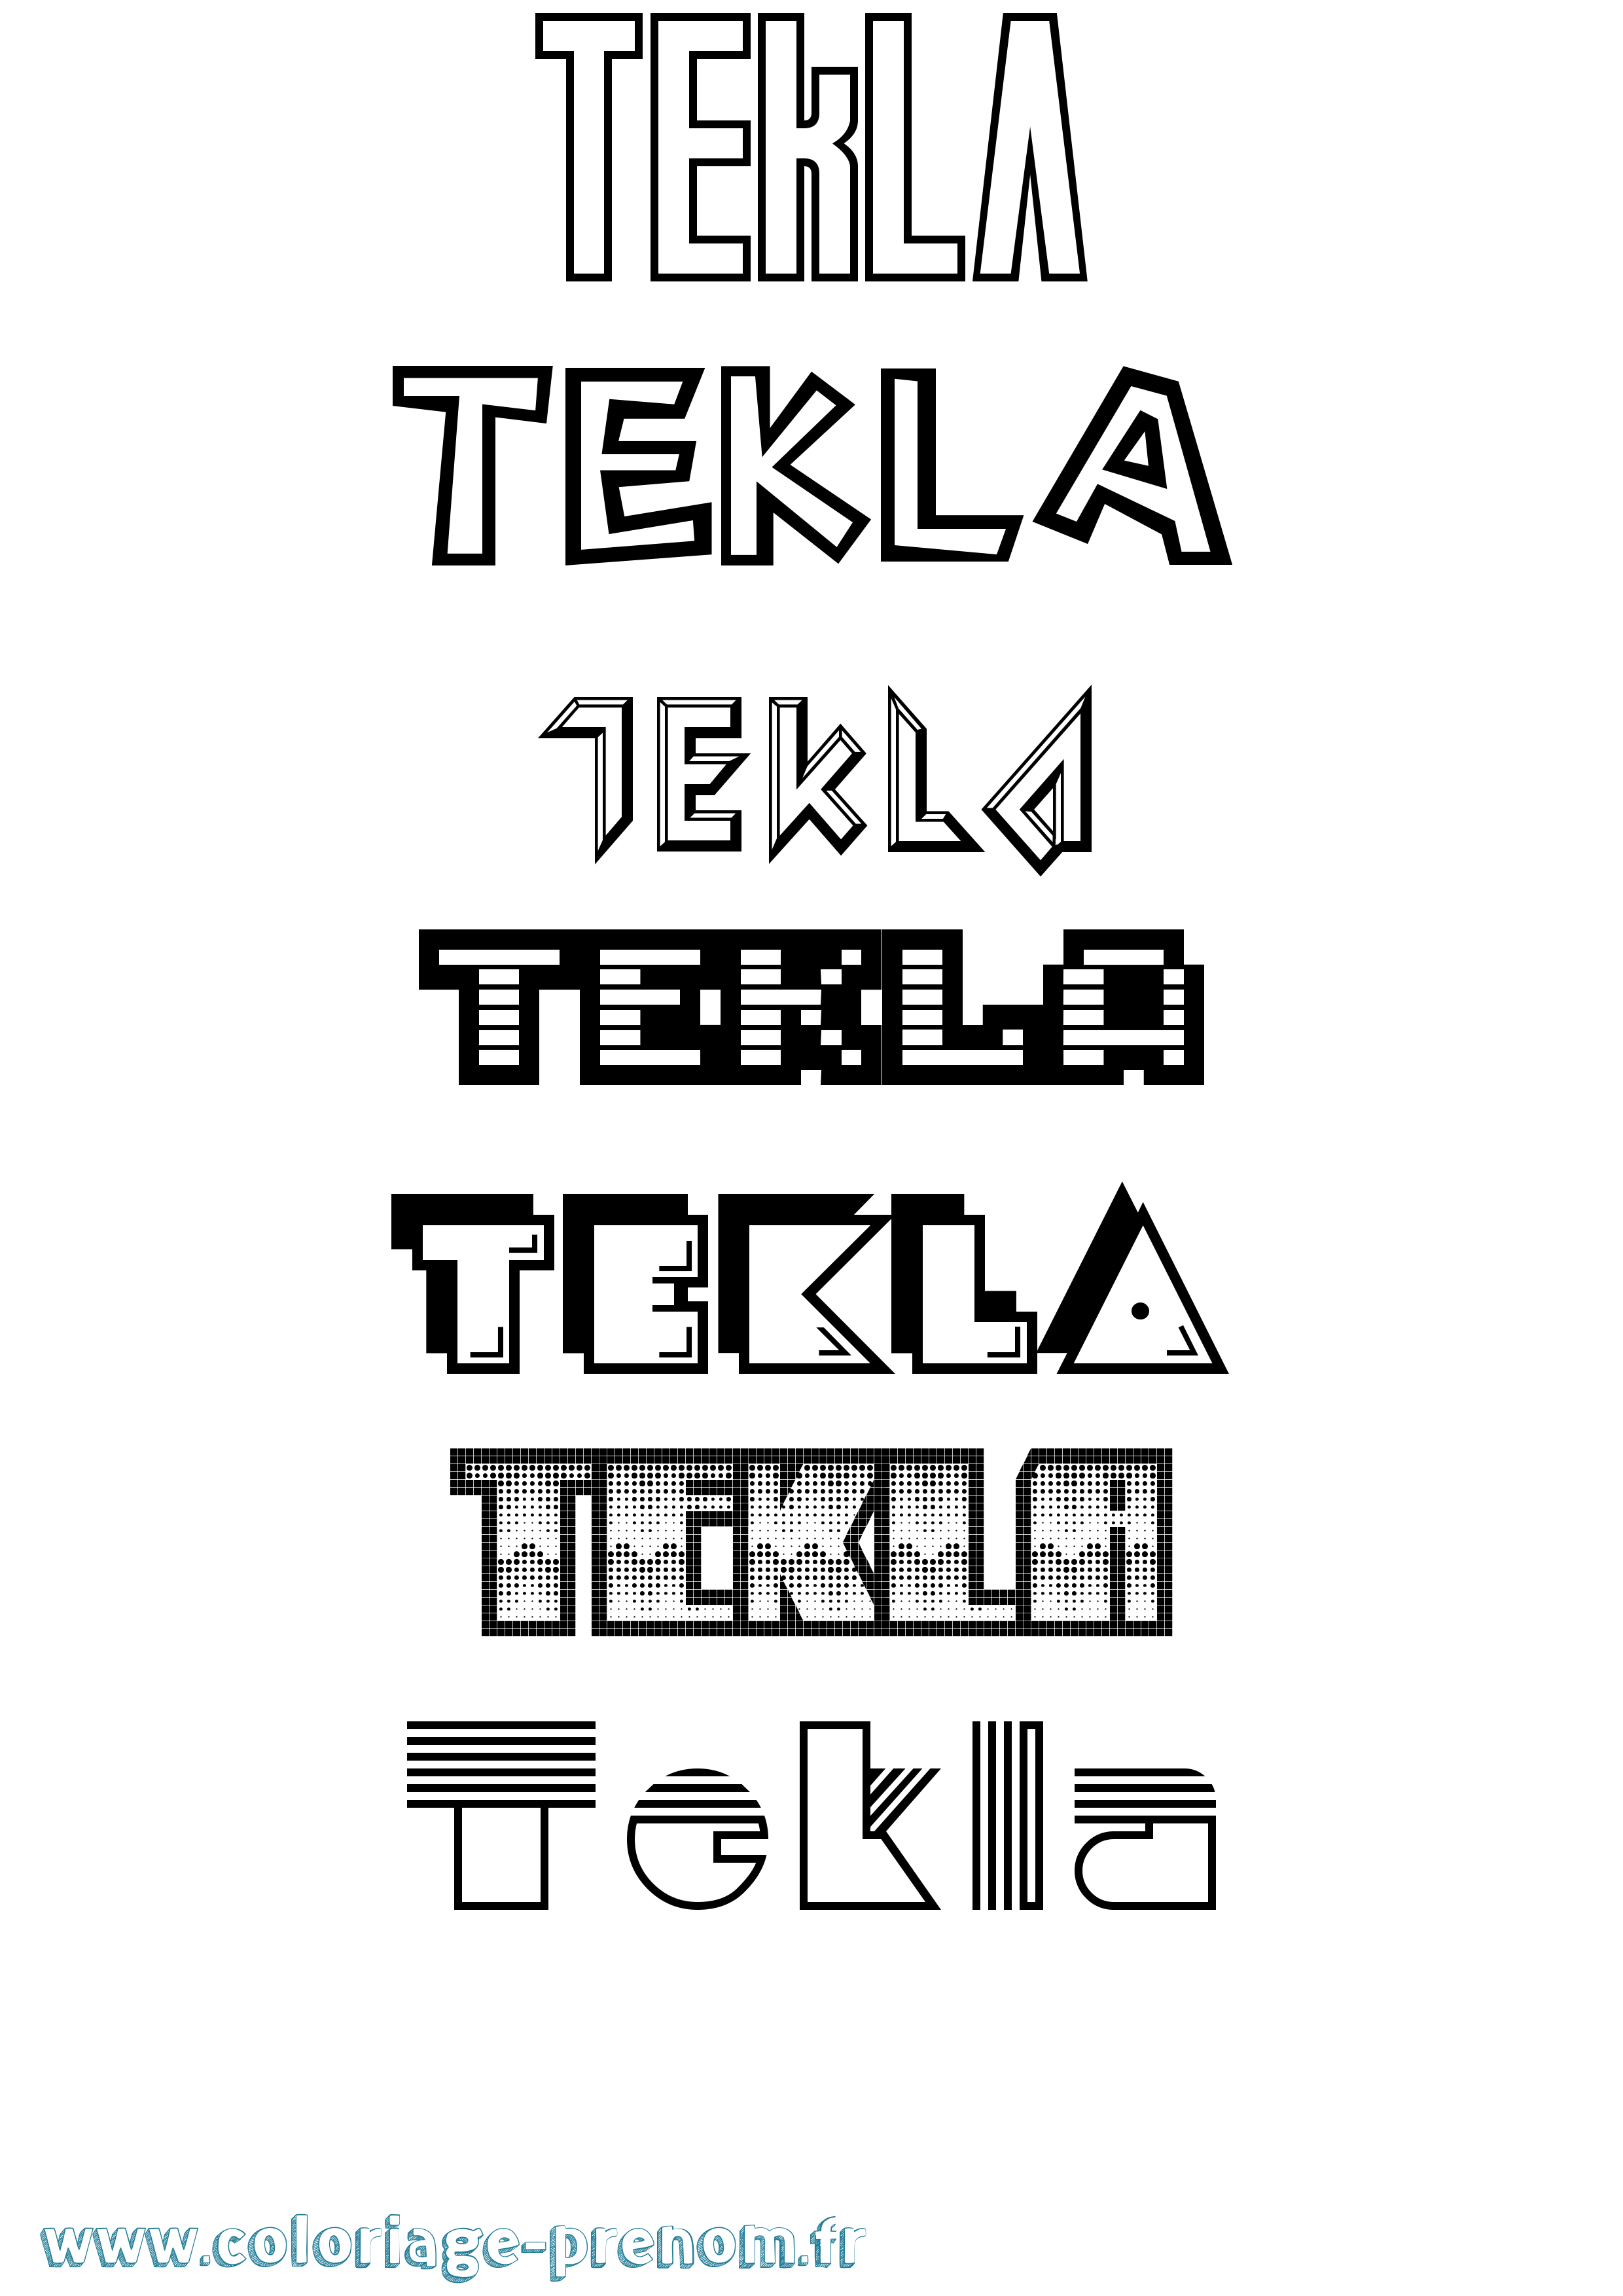 Coloriage prénom Tekla Jeux Vidéos